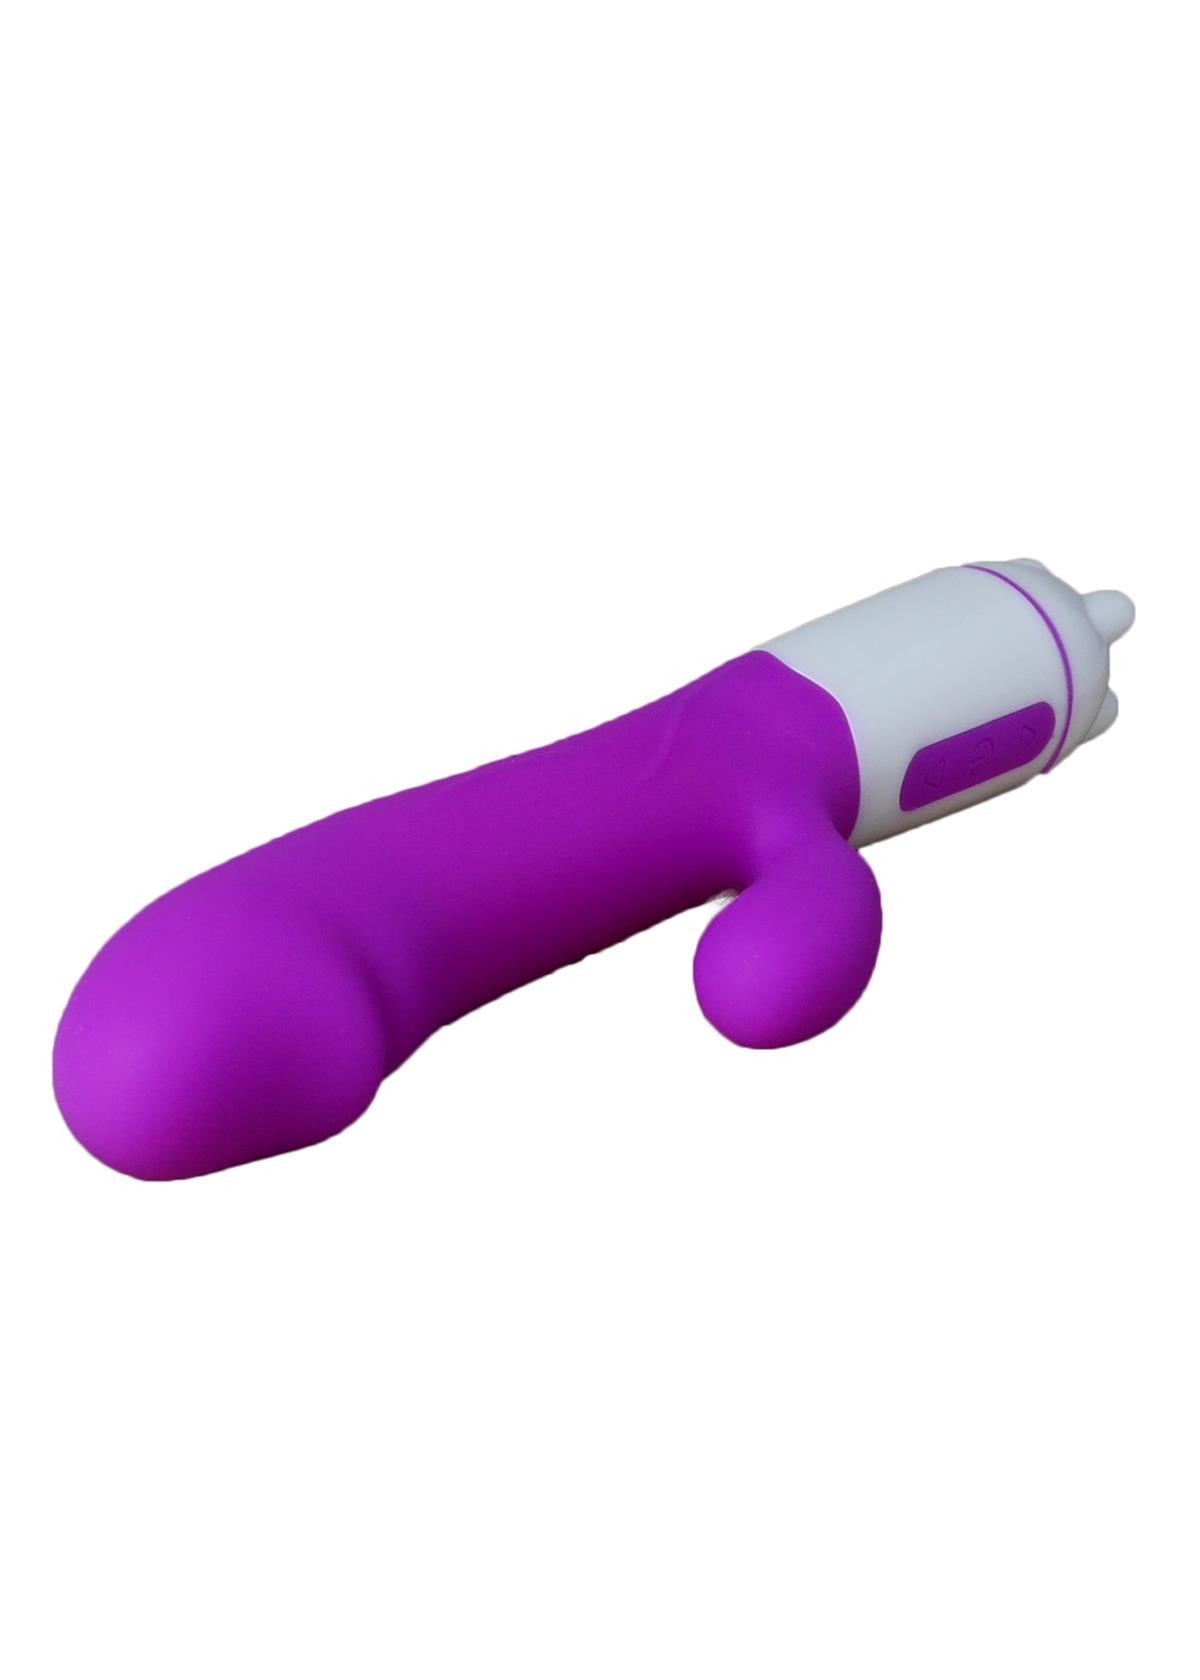 Bossoftoys - 26-00125 - Julia - G spot & clit stimulator Vibrator - New Design - 19 cm  - 36 function - 5 speed - Purple - colour box